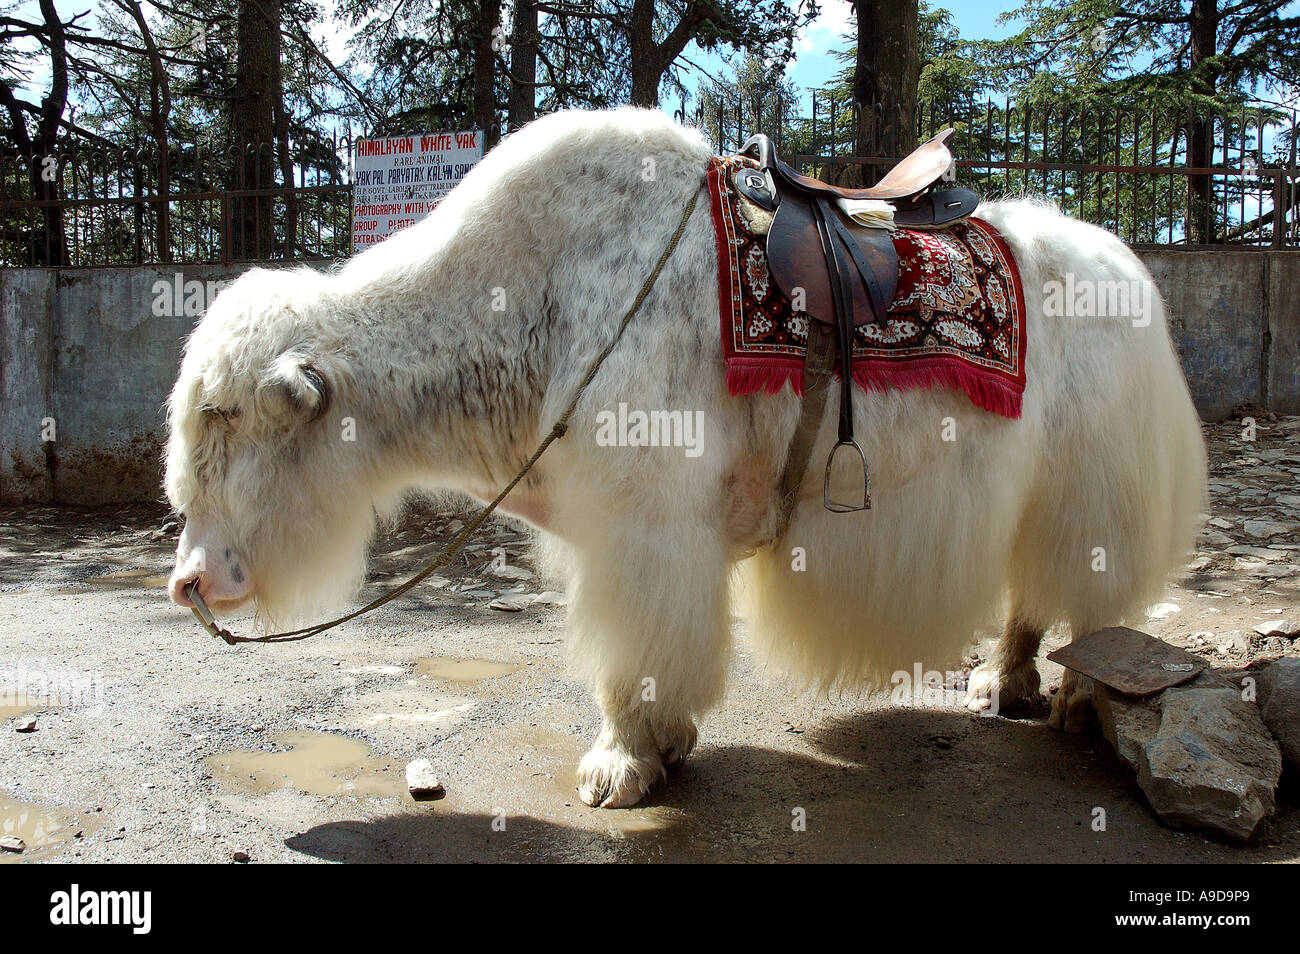 White Yak animal with saddle near Simla Himachal Pradesh India Stock Photo  - Alamy